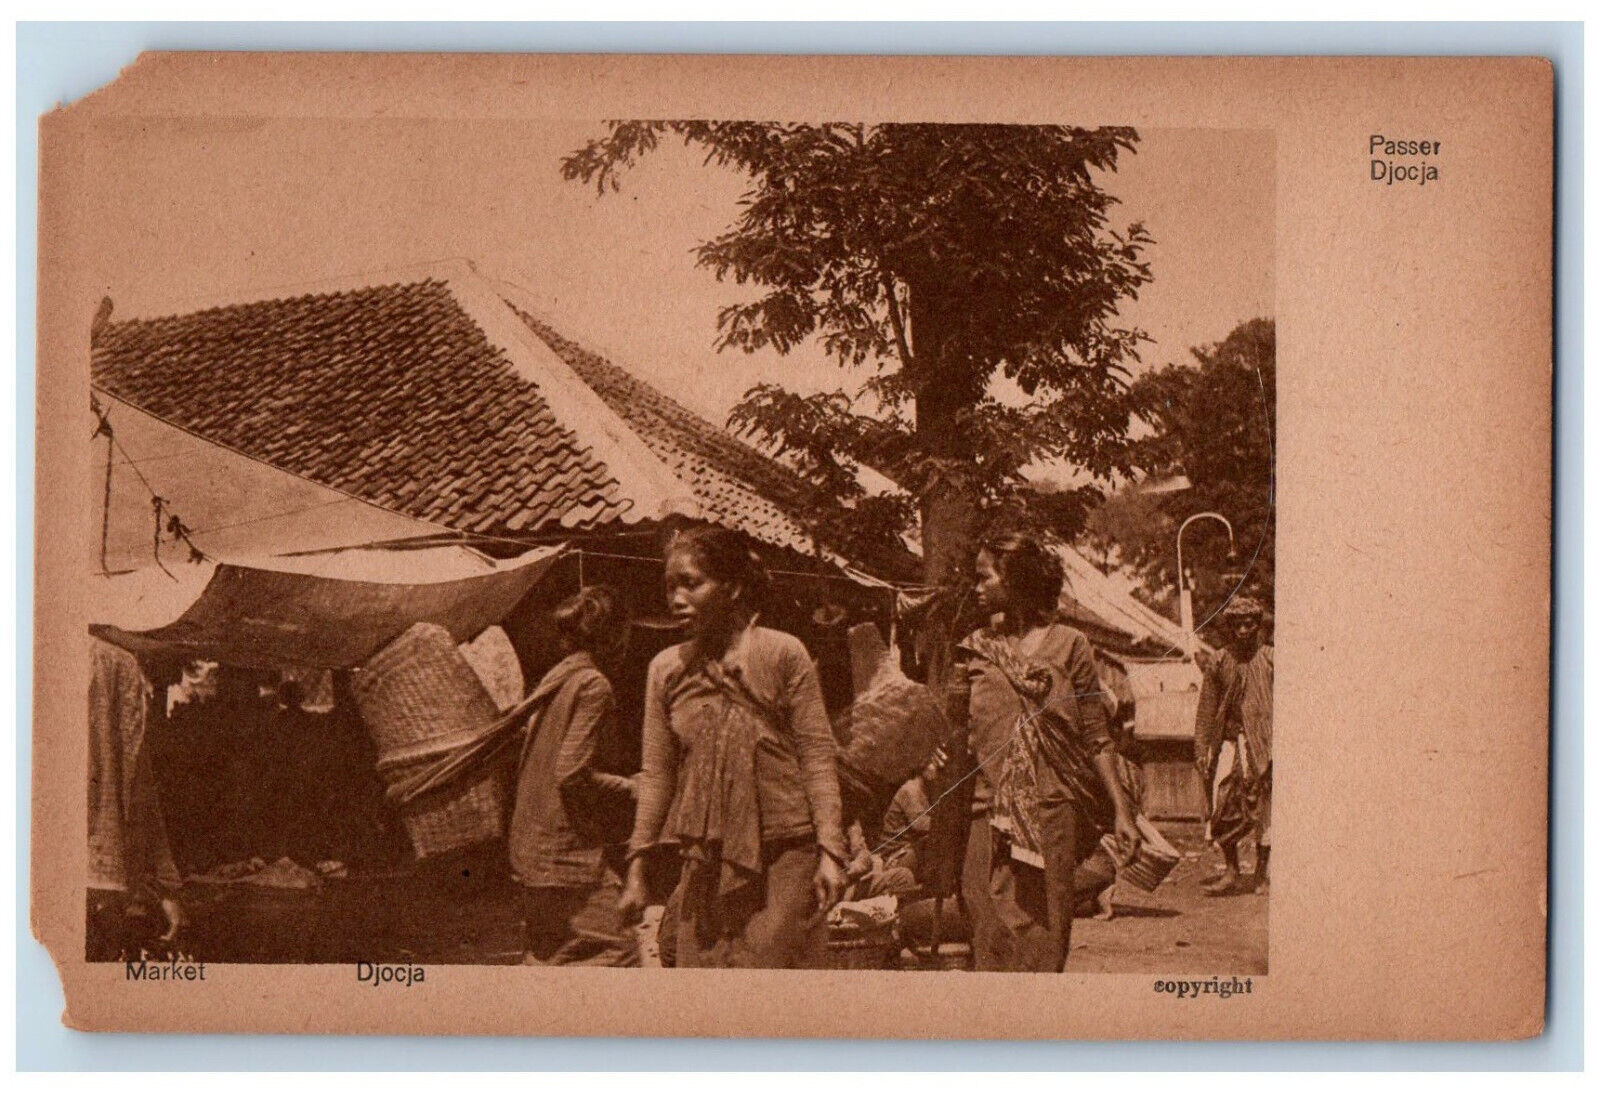 Djocja Java Indonesia Postcard Scene of Busy Market c1910 Unposted Antique